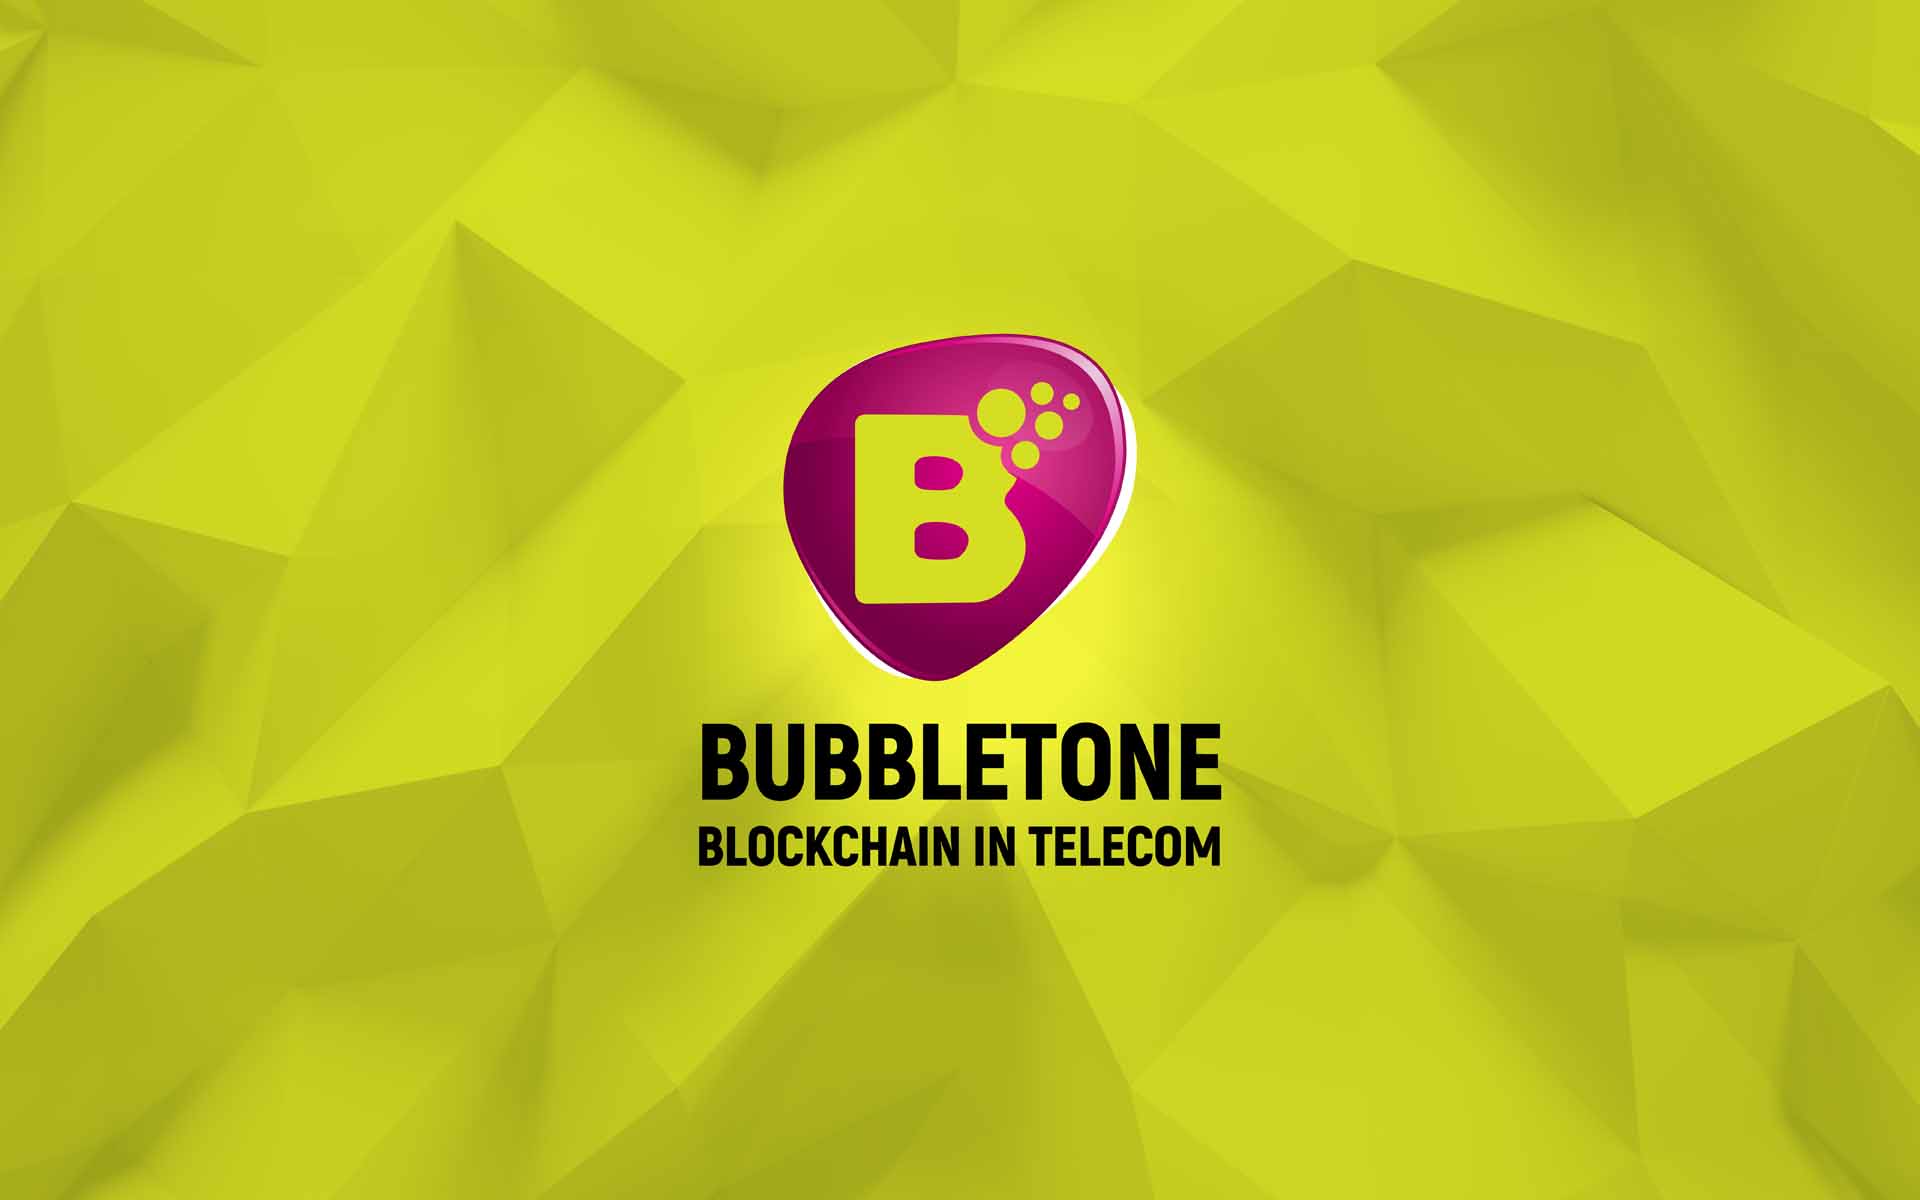 BubbleTone Creates Ultrafast Blockchain to Decentralize Mobile Roaming